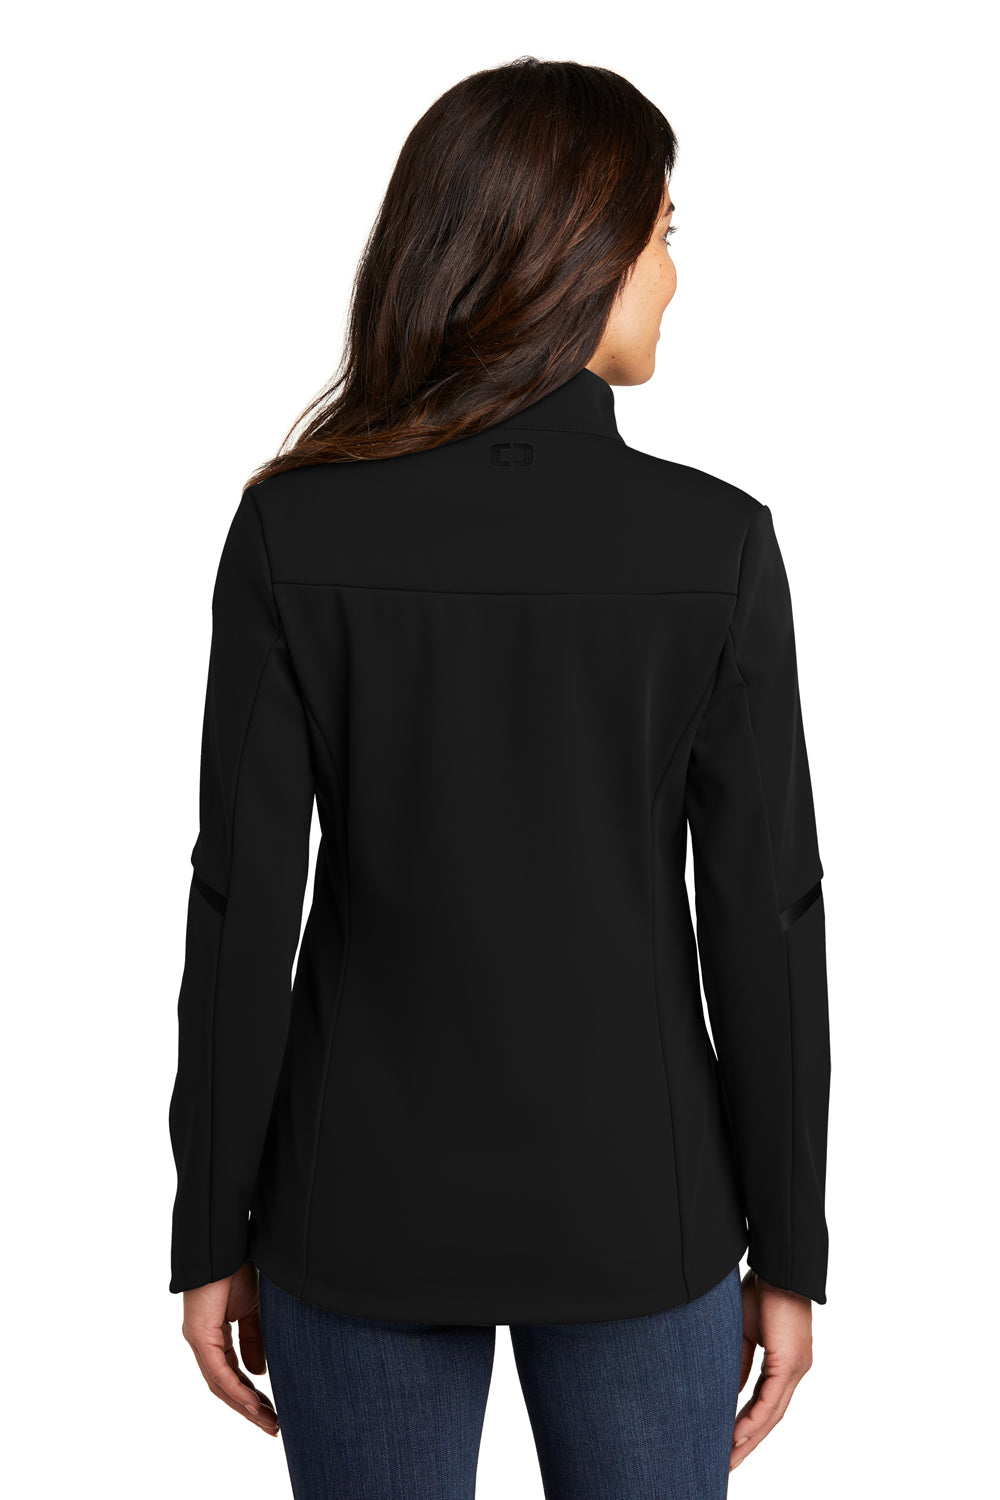 Ogio LOG725 Womens Exaction Wind & Water Resistant Full Zip Jacket Black Back